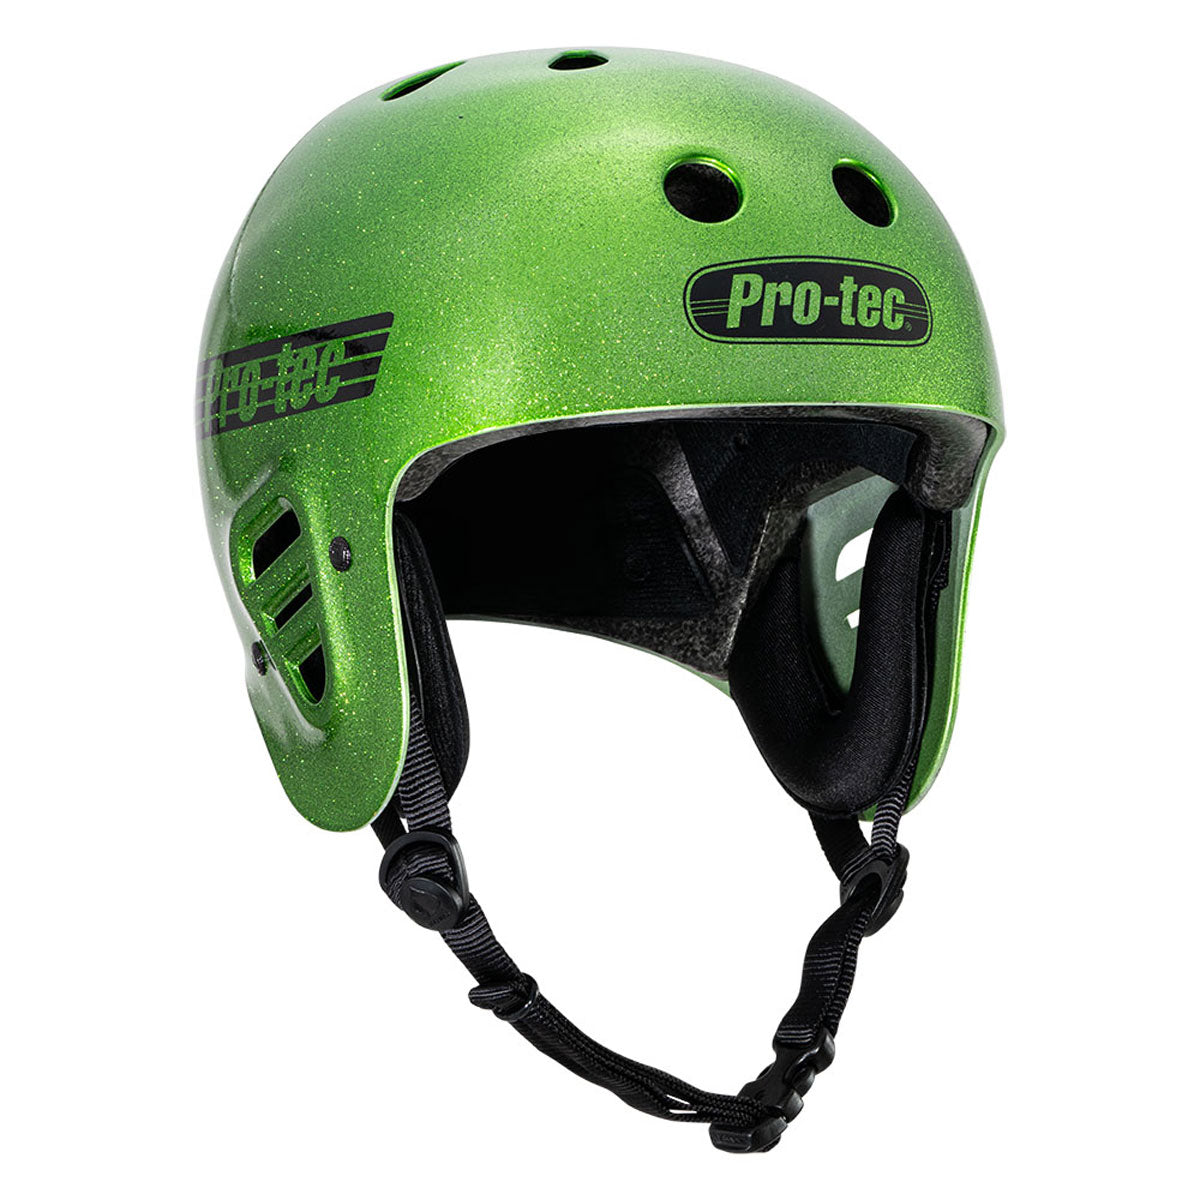 Pro-Tec Full Cut Certified Helmet - Candy Green Flake image 3